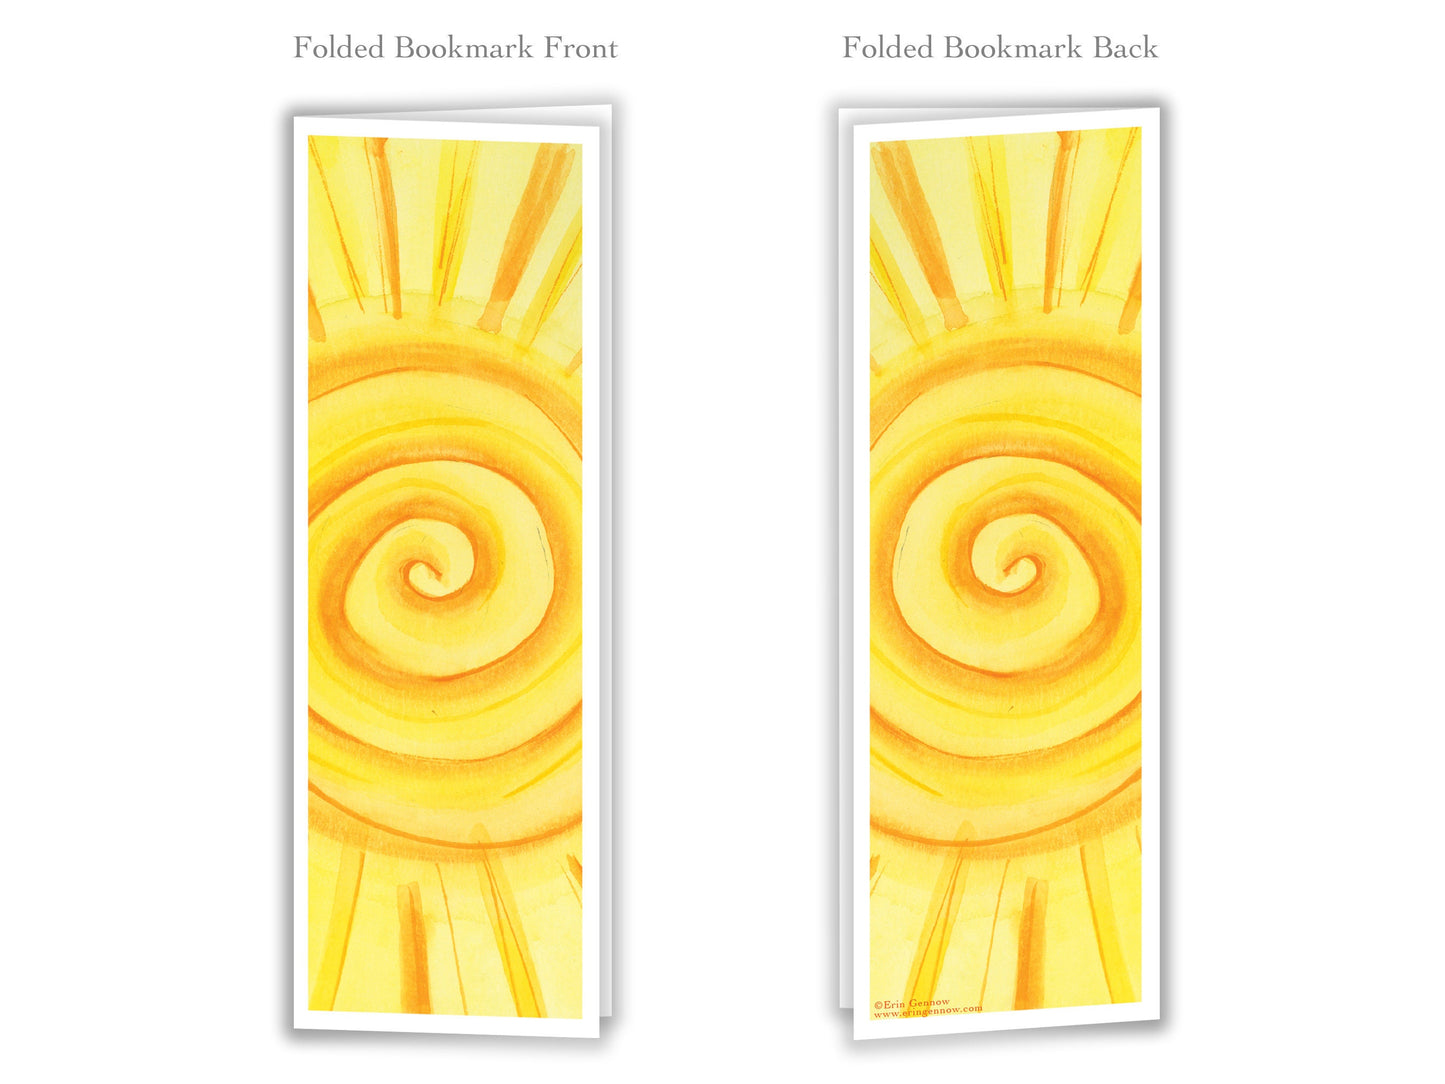 Folded Bookmarks - Set of 4 - The Sky Series - Rainbow, Sun, Moon, Stars, Handmade, 100% cotton rag heavy weight paper